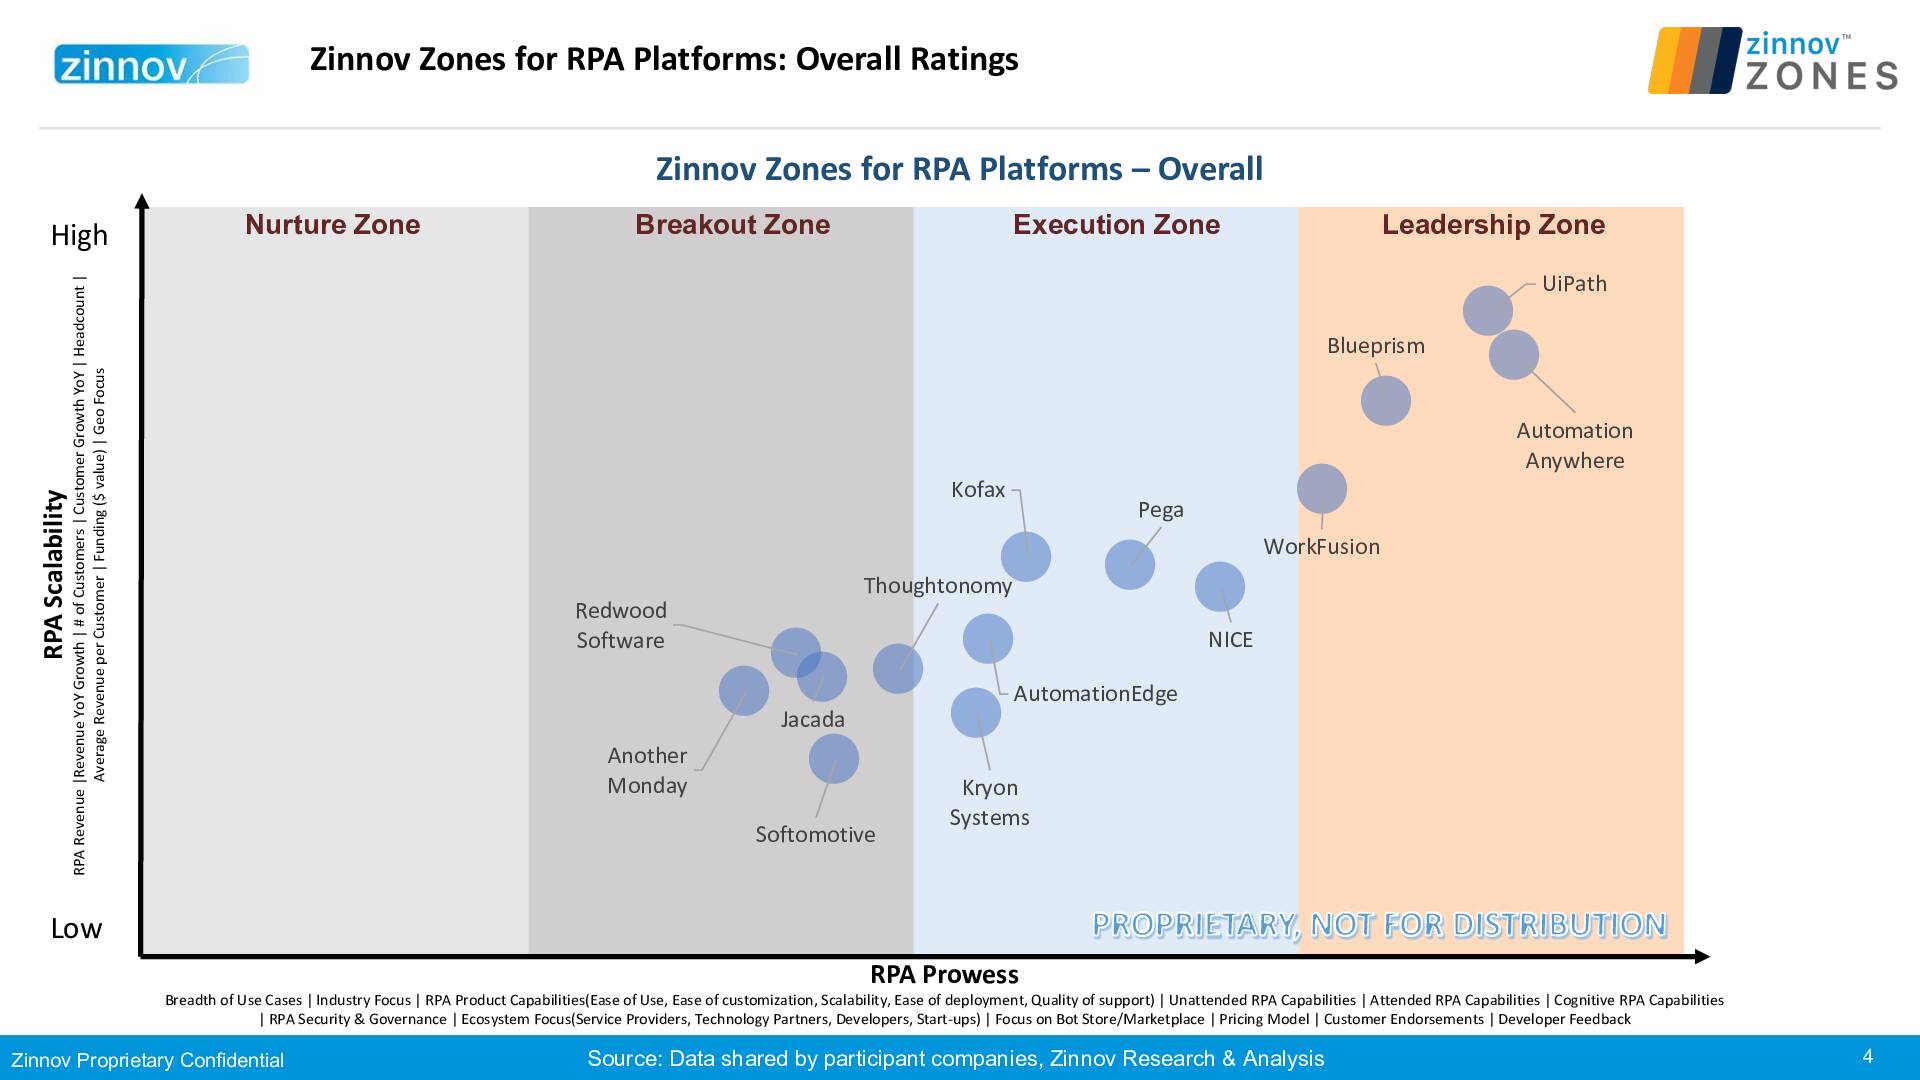 Zinnov Zones Rpa Platforms 2019 Ratings Revised V54